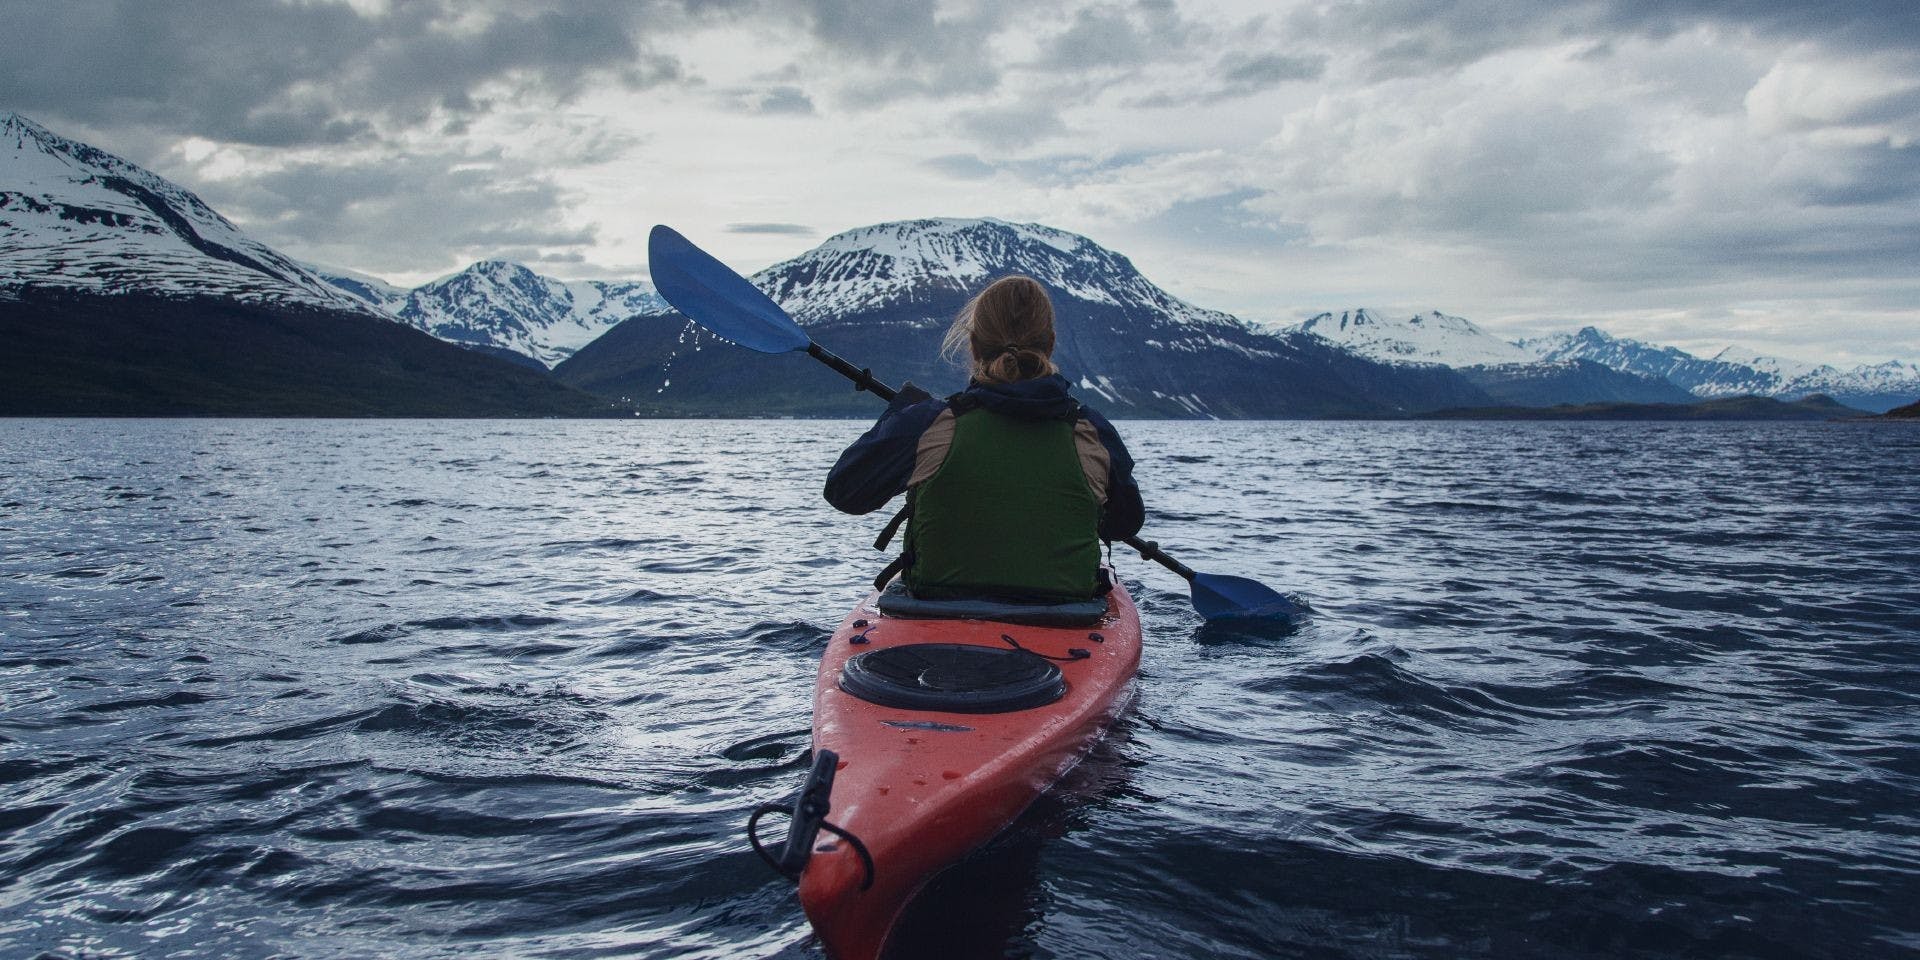 Tikkurila UK Sustainability Header Image | Man on a Red Kayak Looking at Mountains